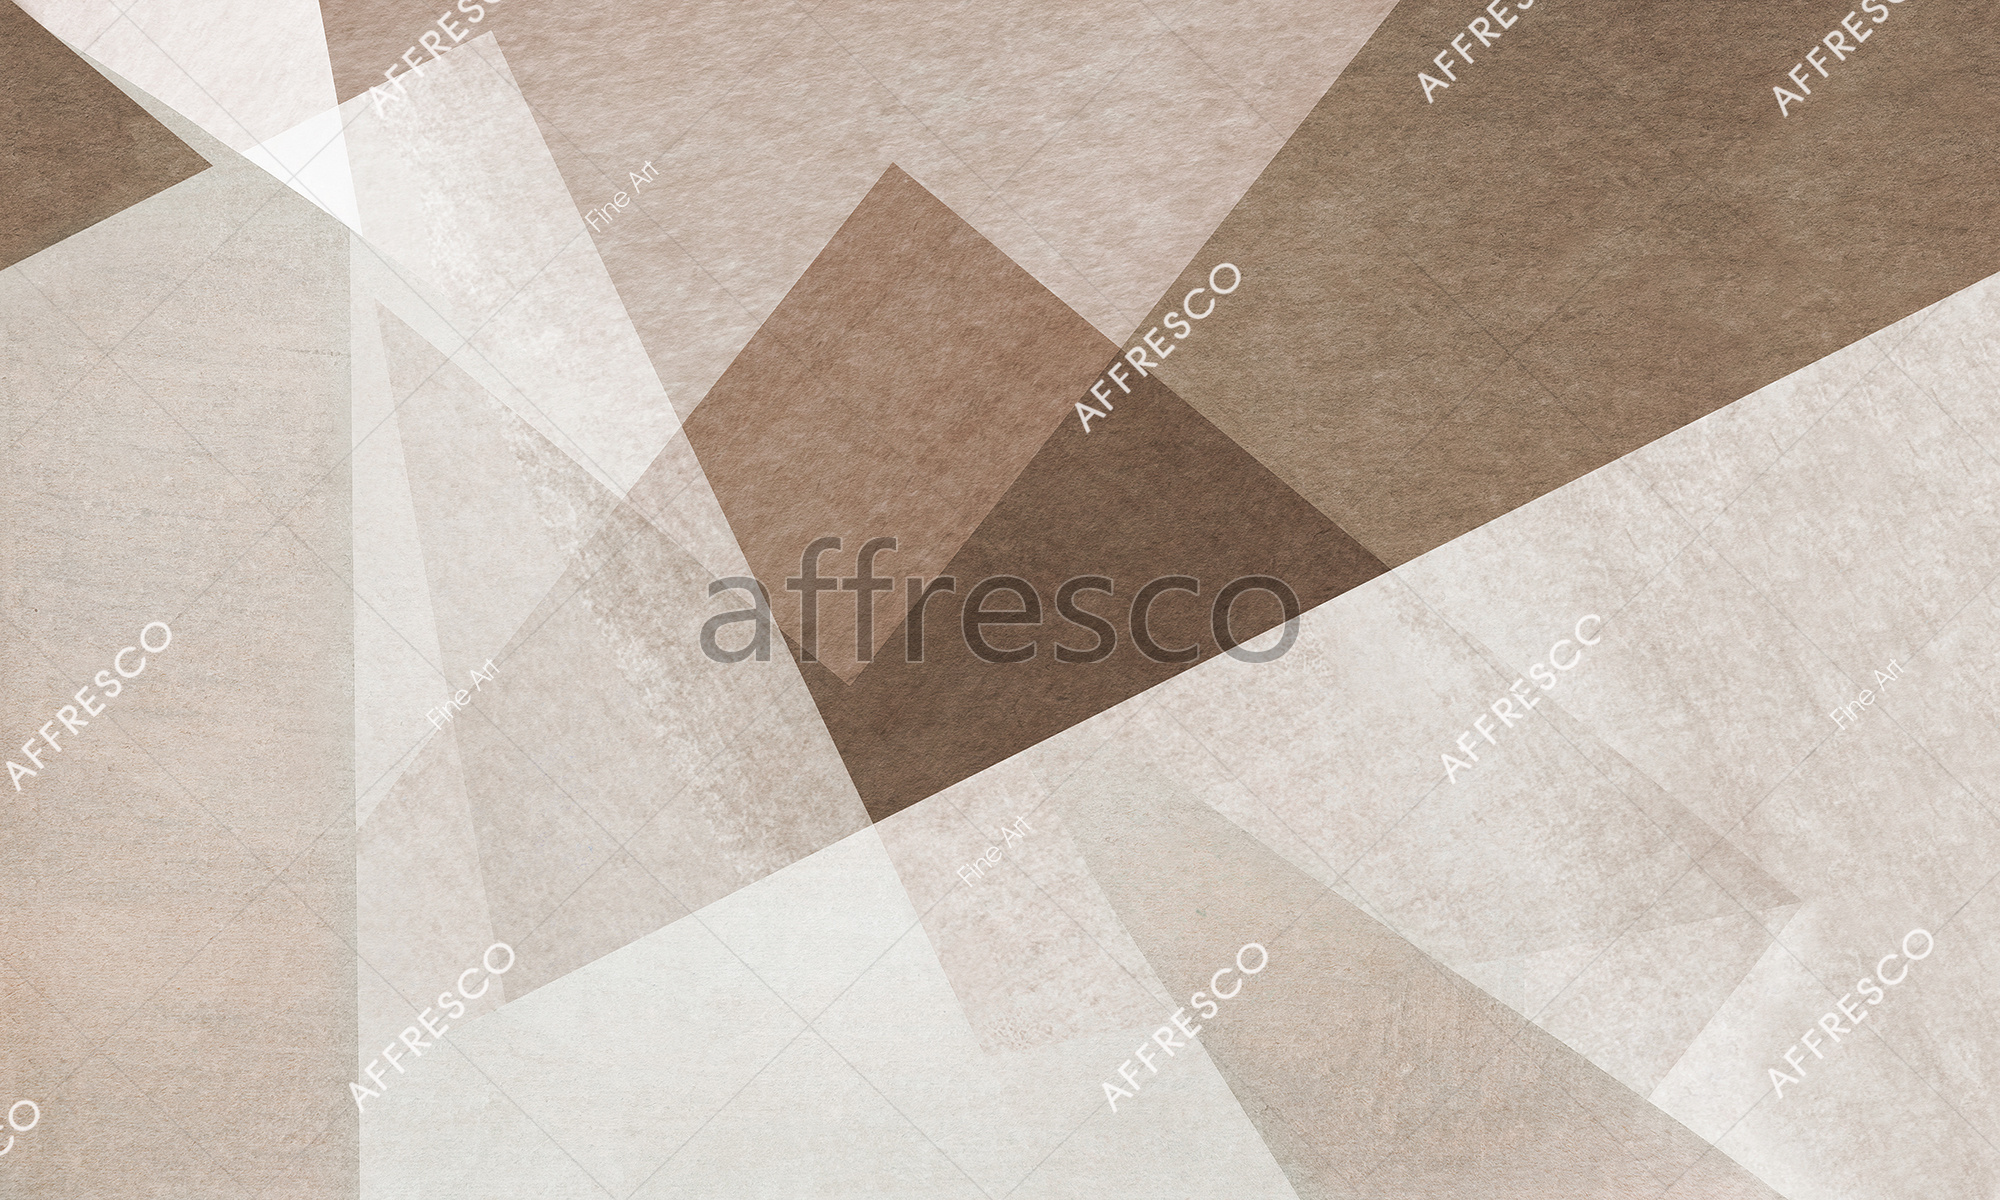 RE807-COL4 | Fine Art | Affresco Factory